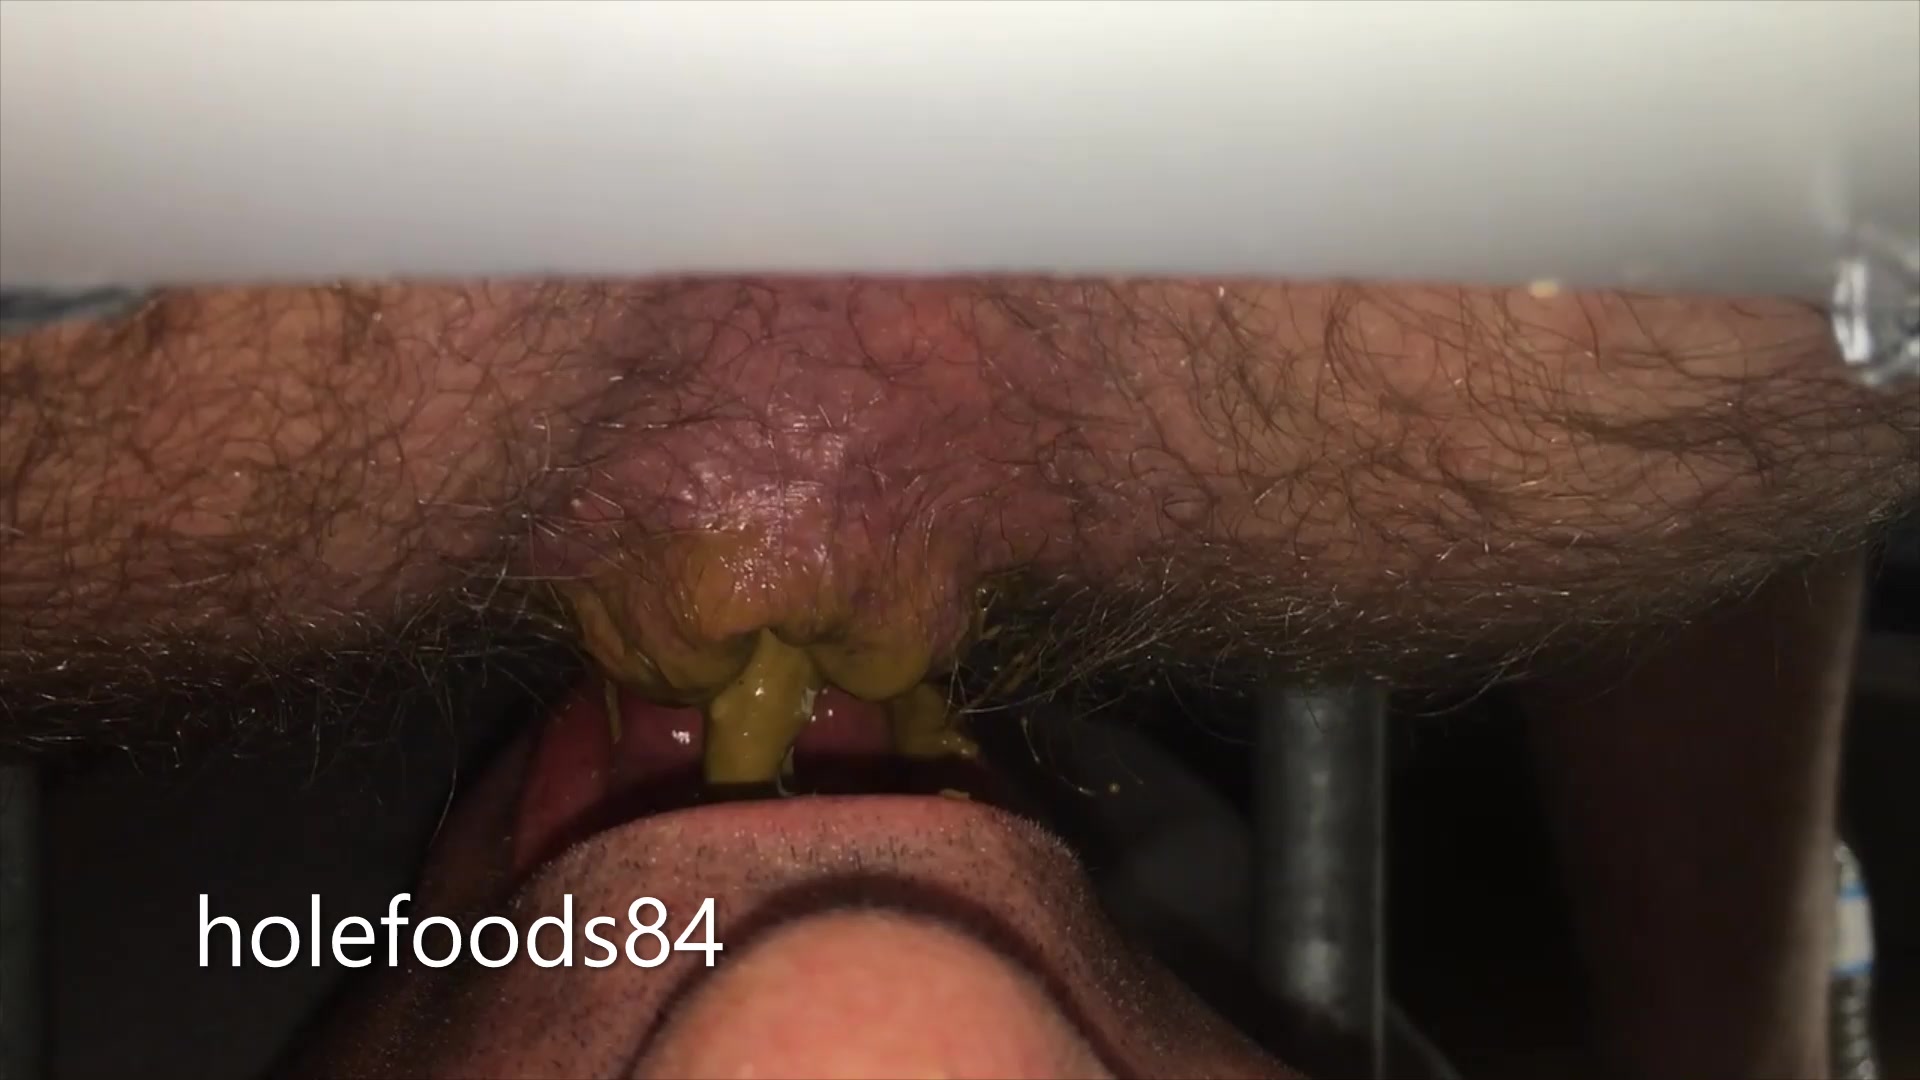 Eating Diarrhea Hard Sexe - The explosive diarrhea feeding video we all deserve - ThisVid.com